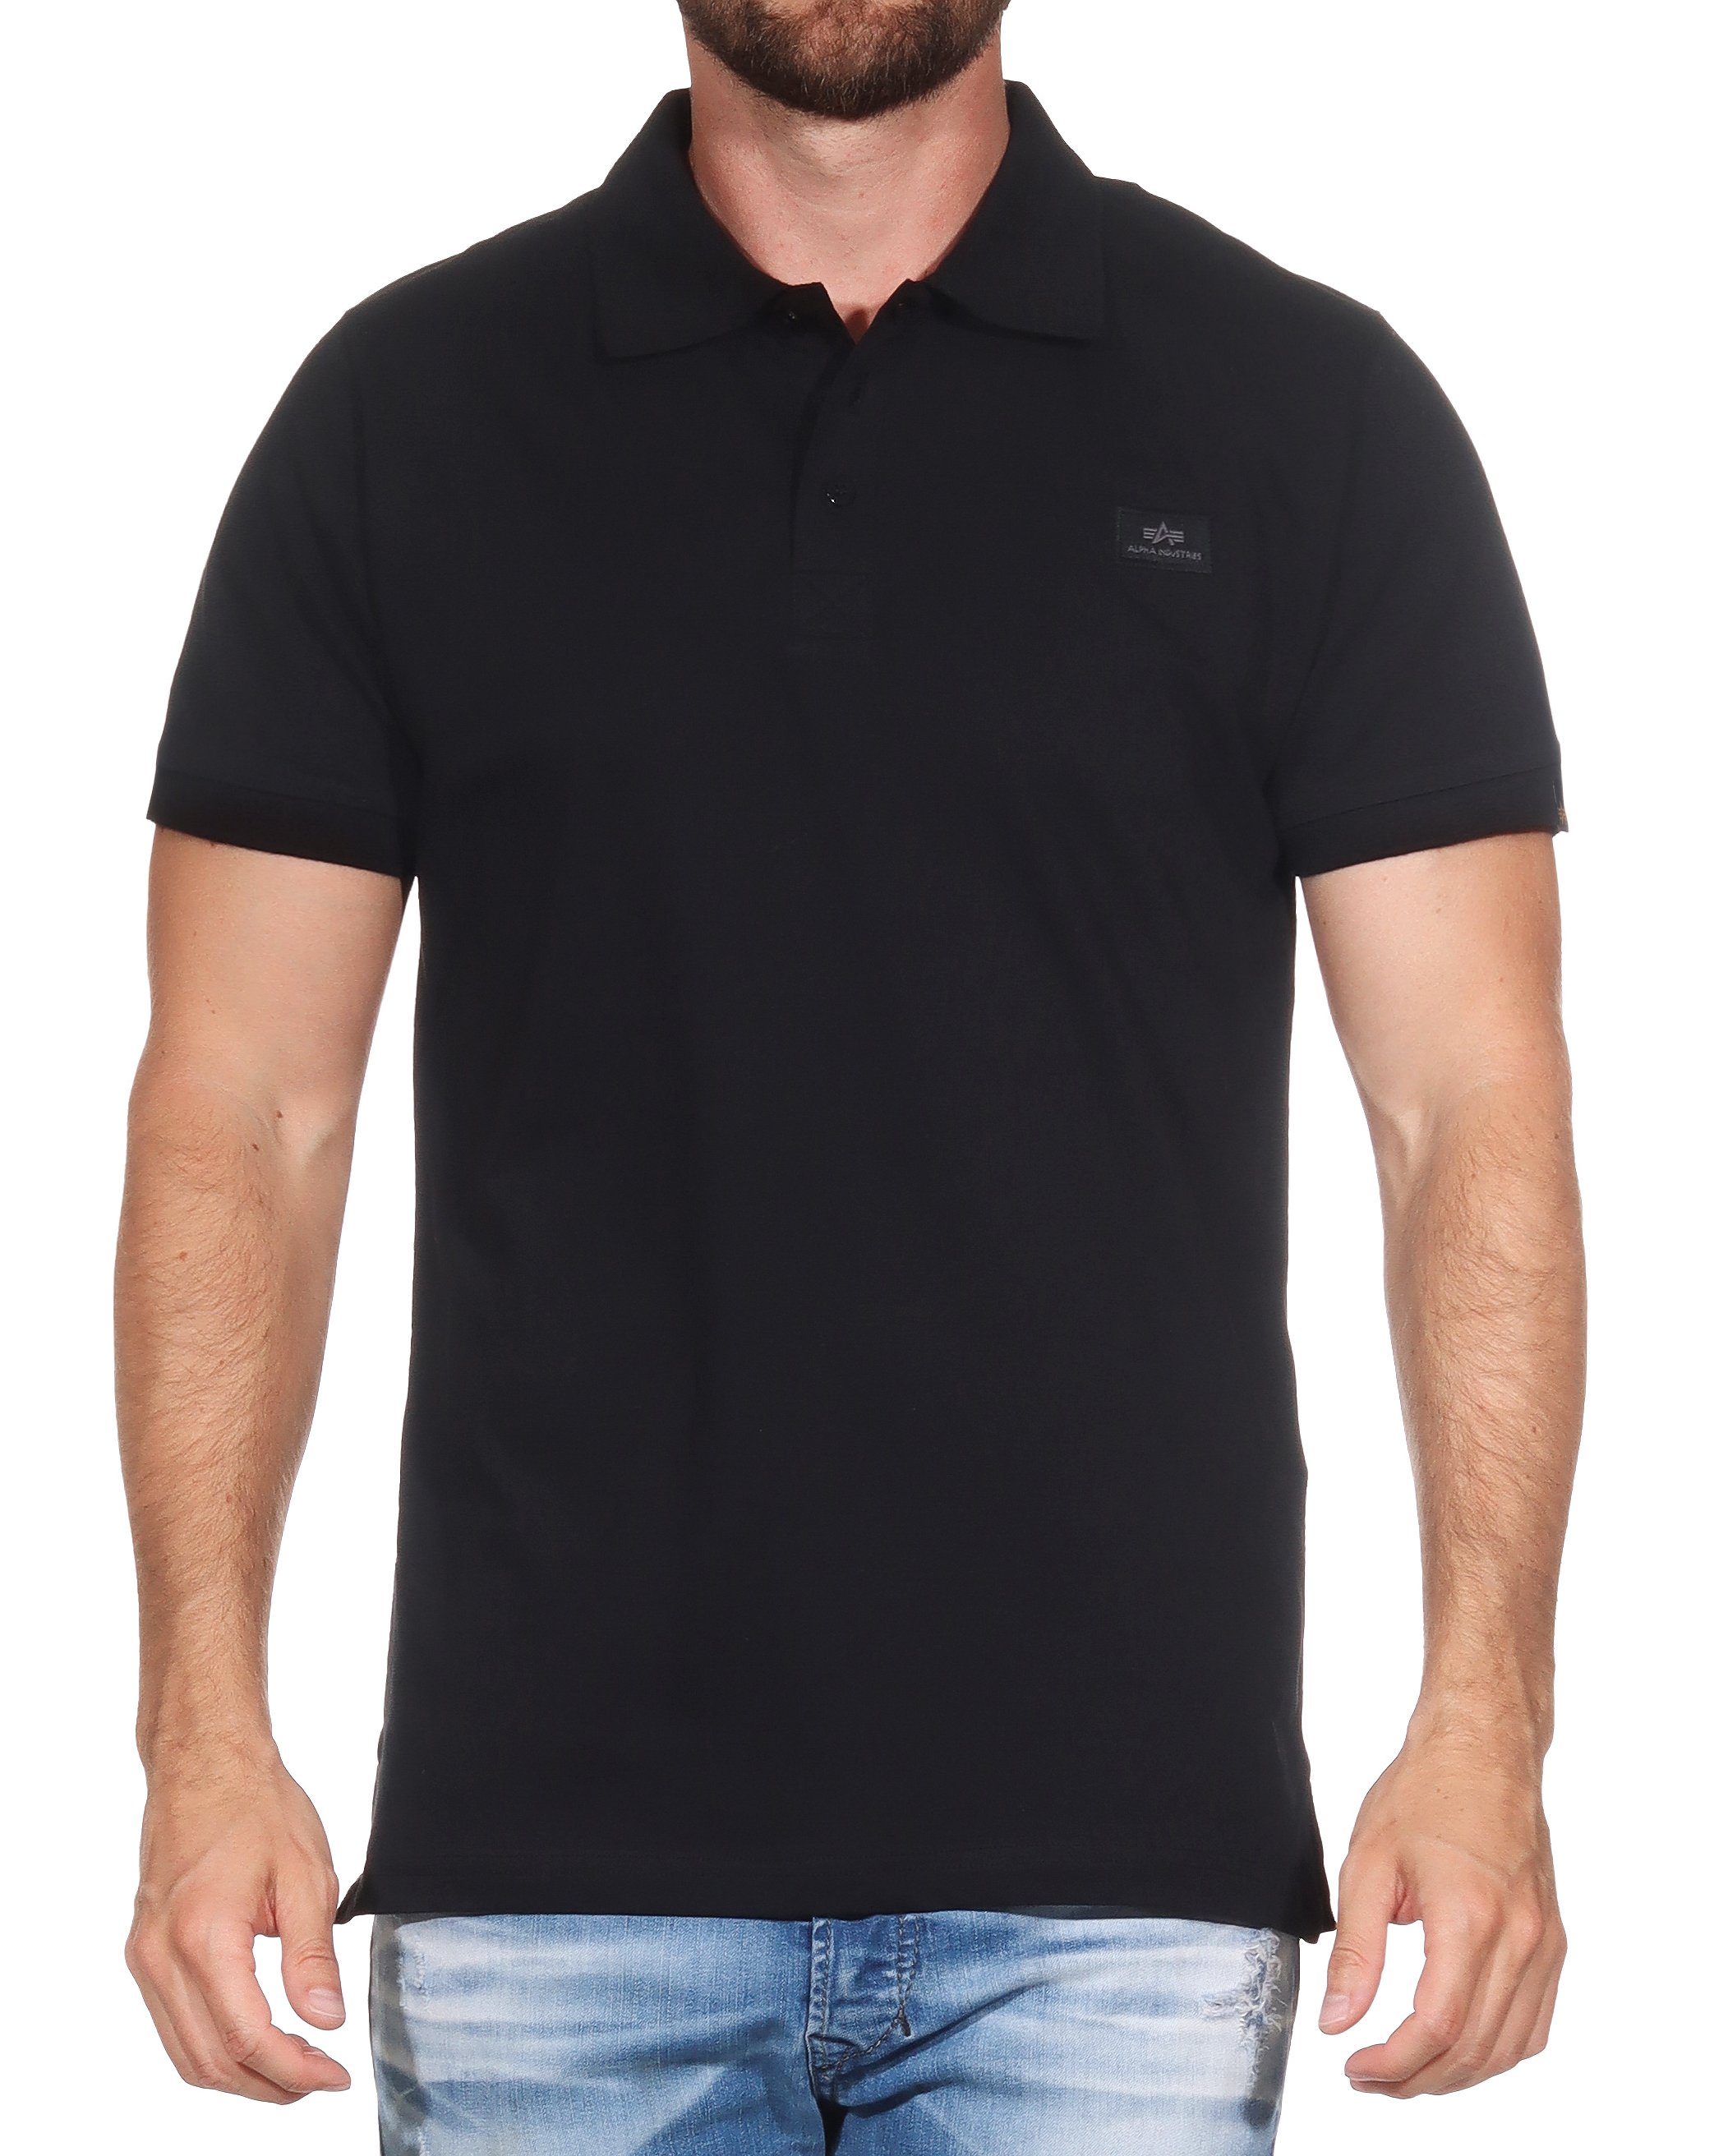 Herren Polo | Lifestyle | L.E.M.B. 136600 X-Fit Industries Herren Oberteile | | Shirt Company Polo Alpha Hemden/Poloshirts